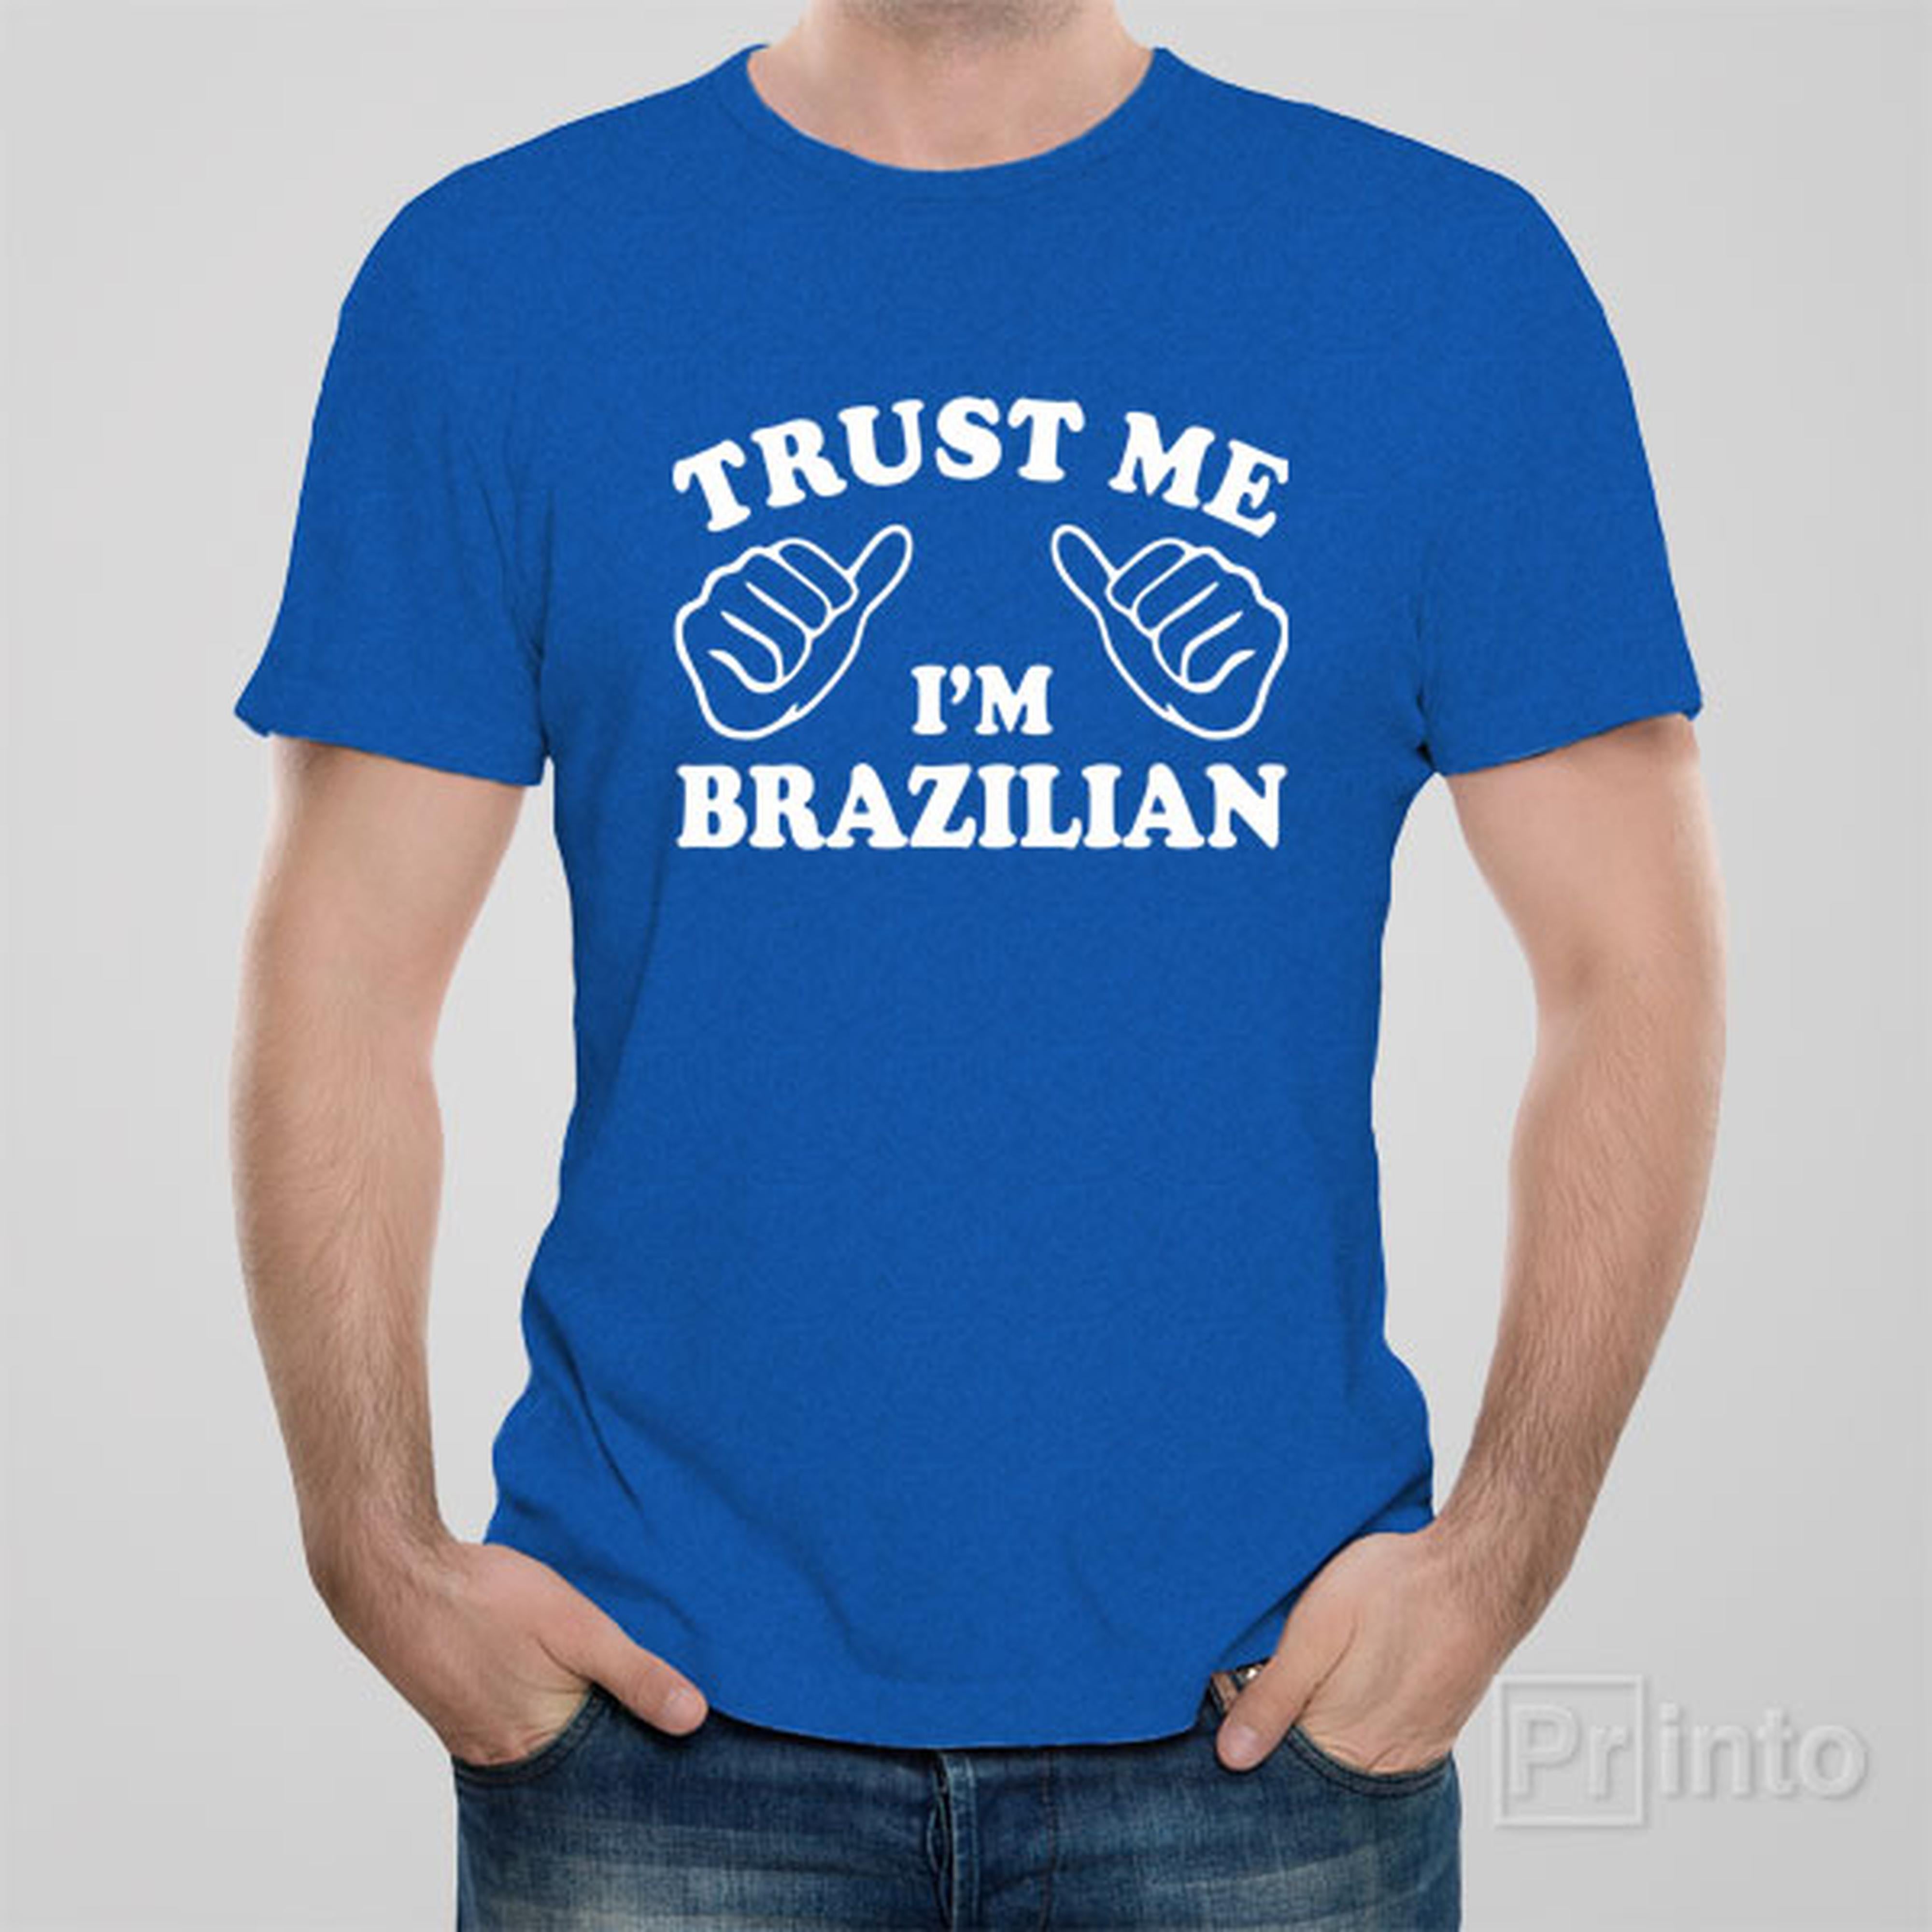 trust-me-i-am-brazilian-t-shirt